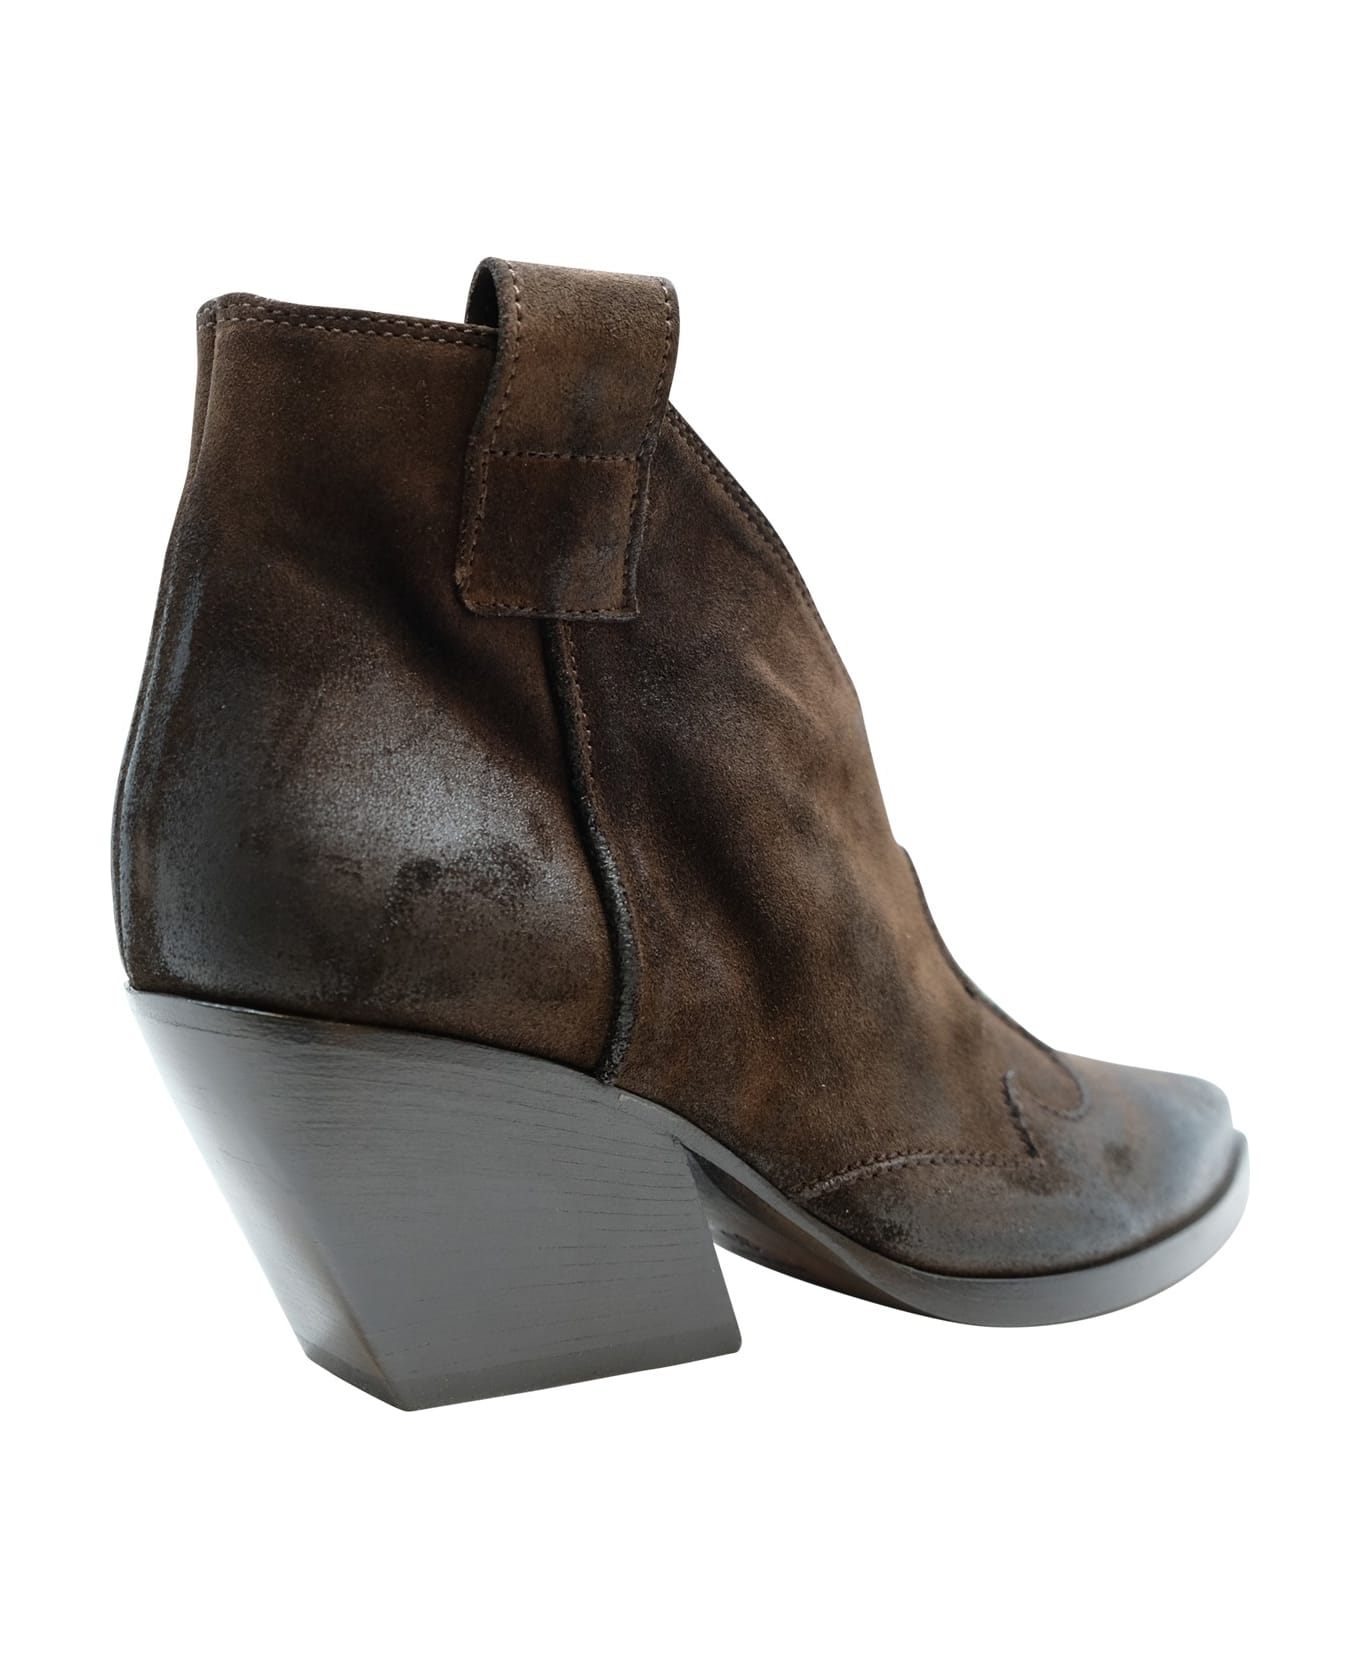 Elena Iachi Suede Ankle Boots - DARK BROWN ブーツ